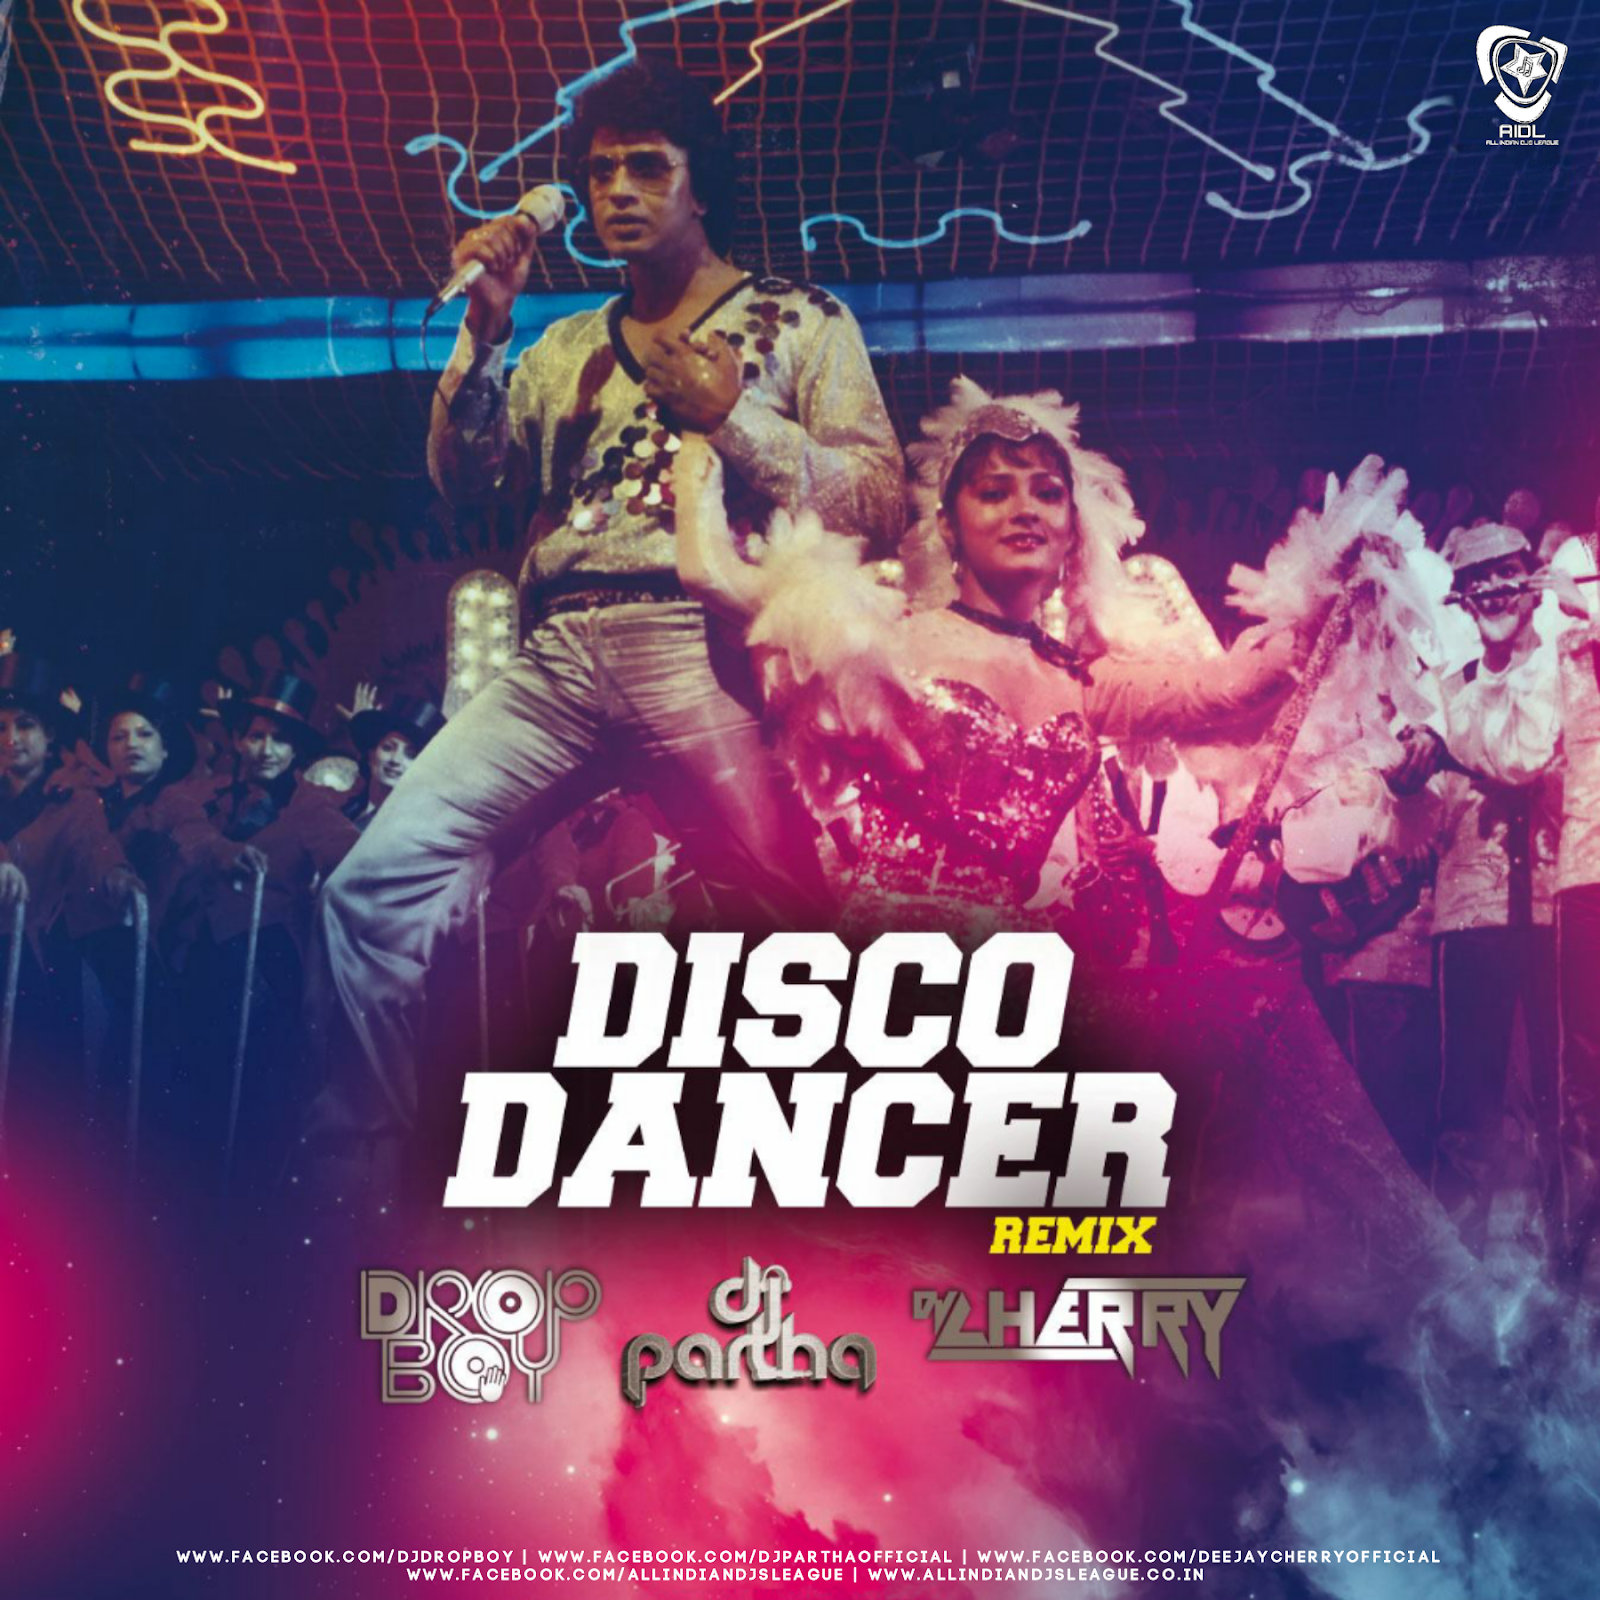 Disco dance remix. Танцор диско. Диско денсер. «Танцор диско» / Disco Dancer. Танцовщица диско.